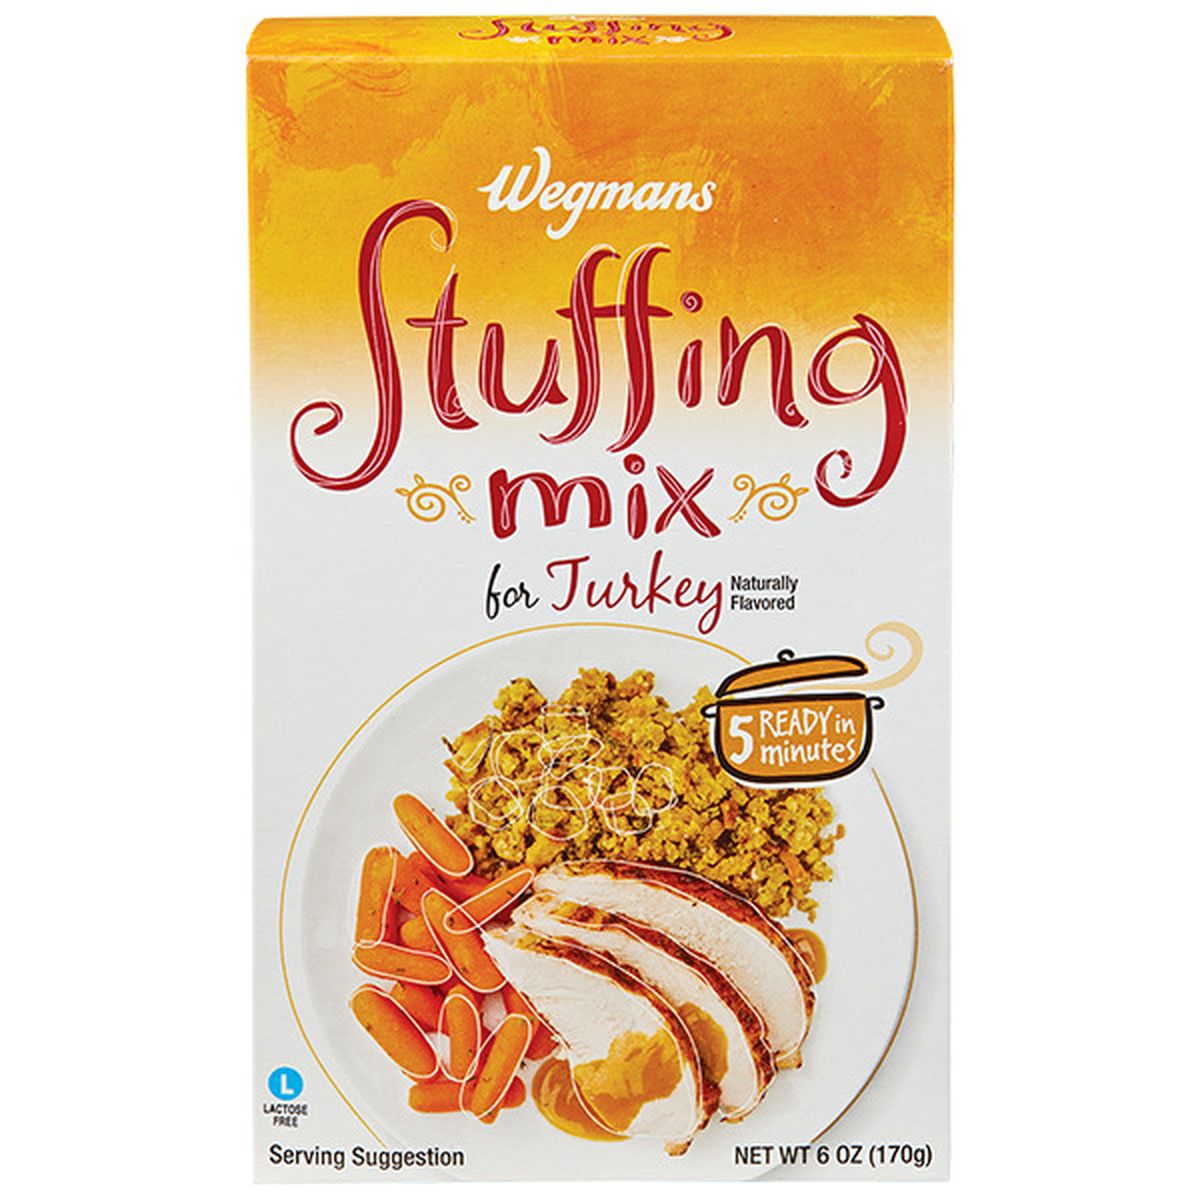 Calories in Wegmans Stuffing Mix for Turkey